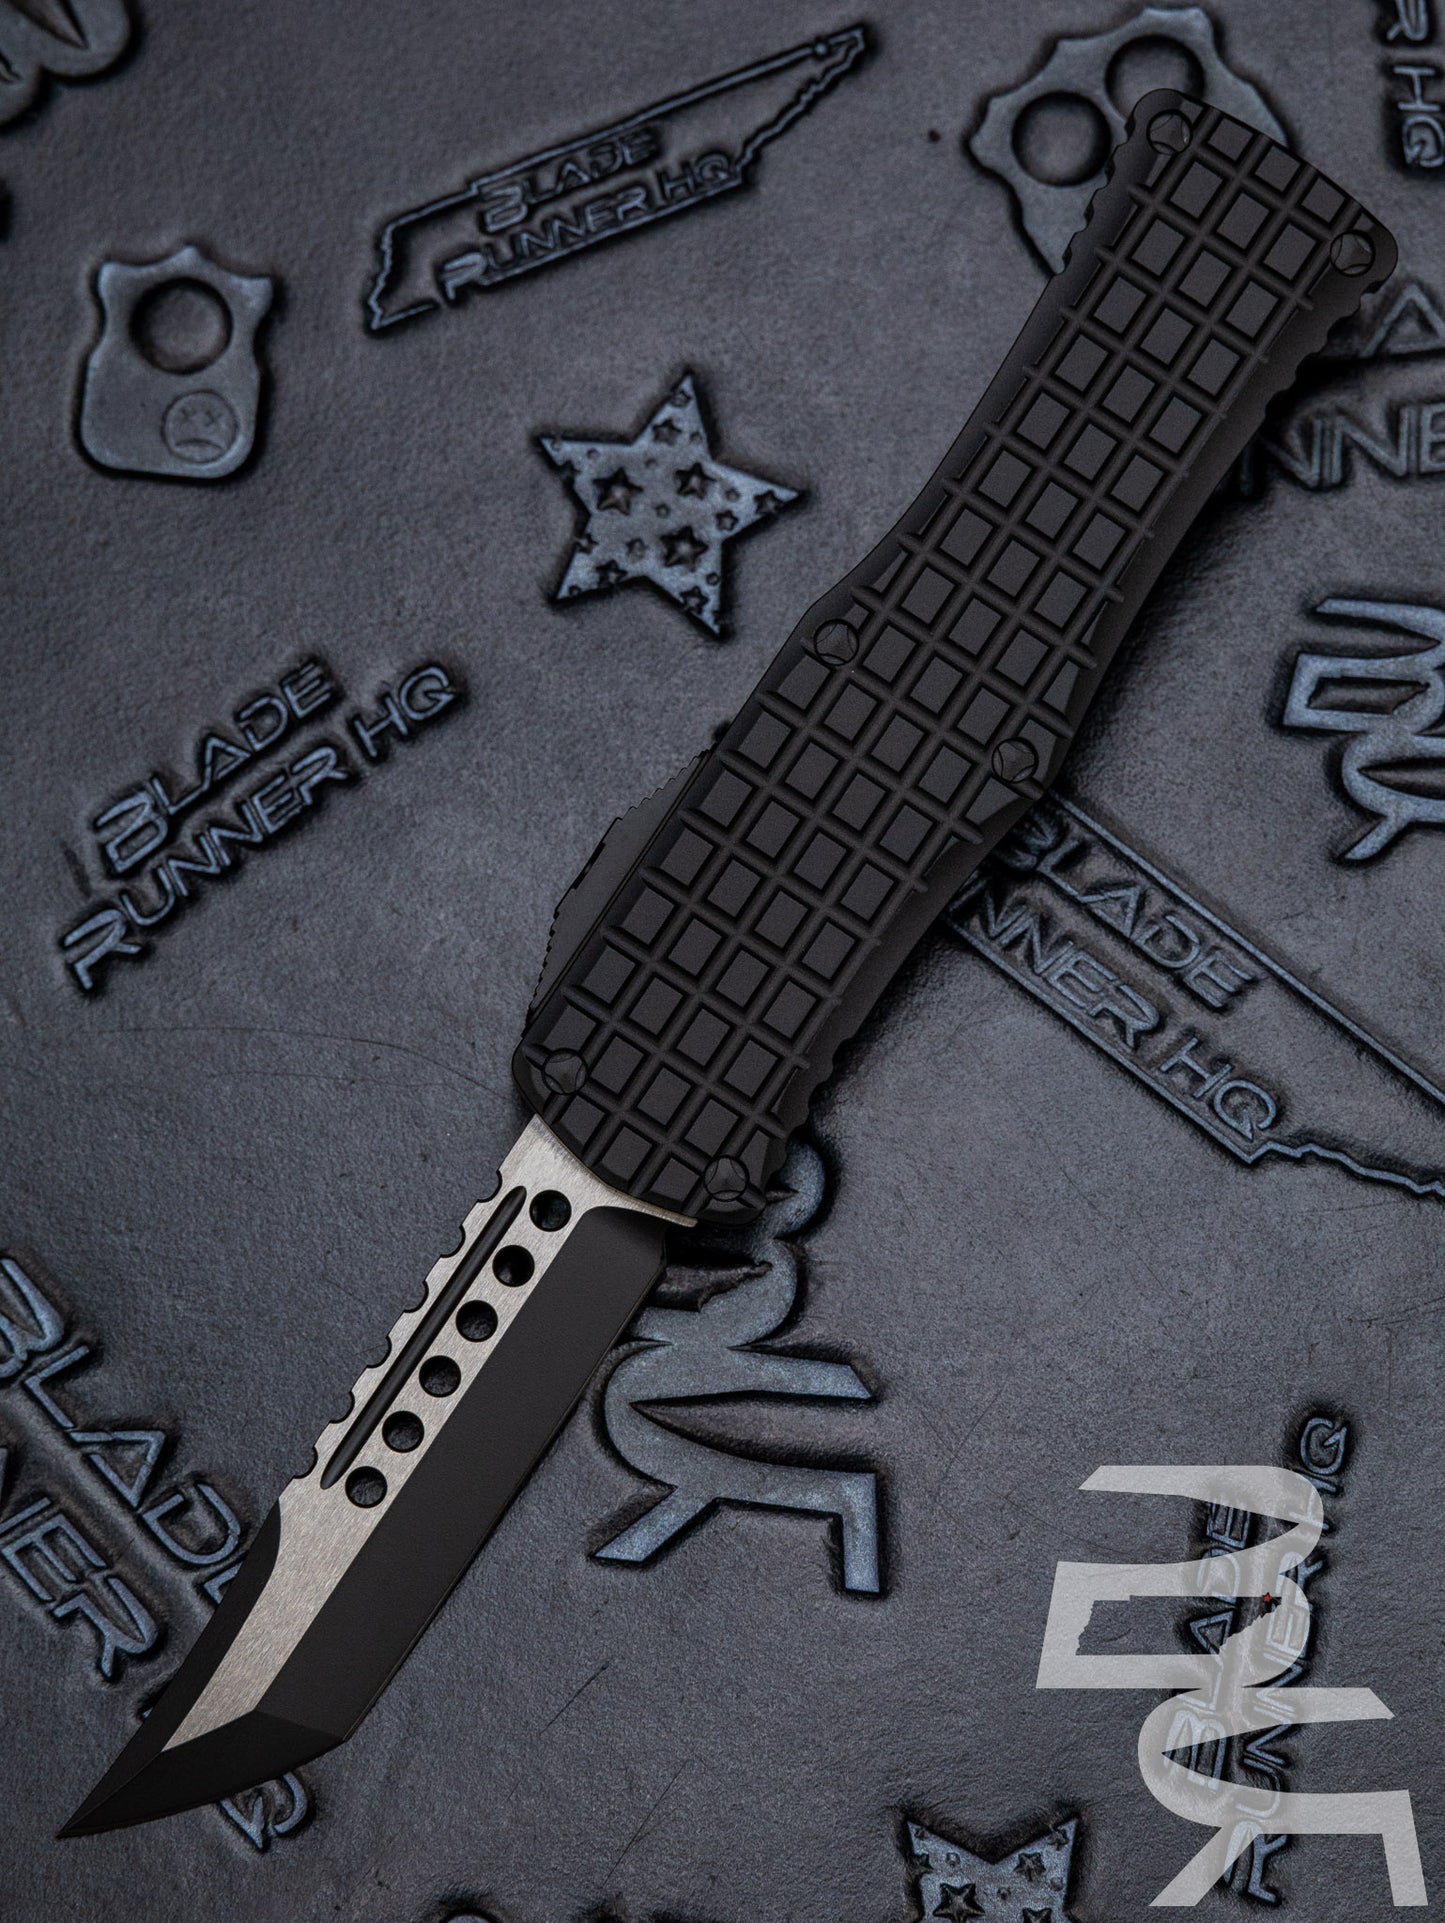 Microtech 919-1TFRS Signature Series Hera Tactical OTF AUTO Knife 3.125" Black Hellhound Tanto Blade, Black Frag Aluminum Handles